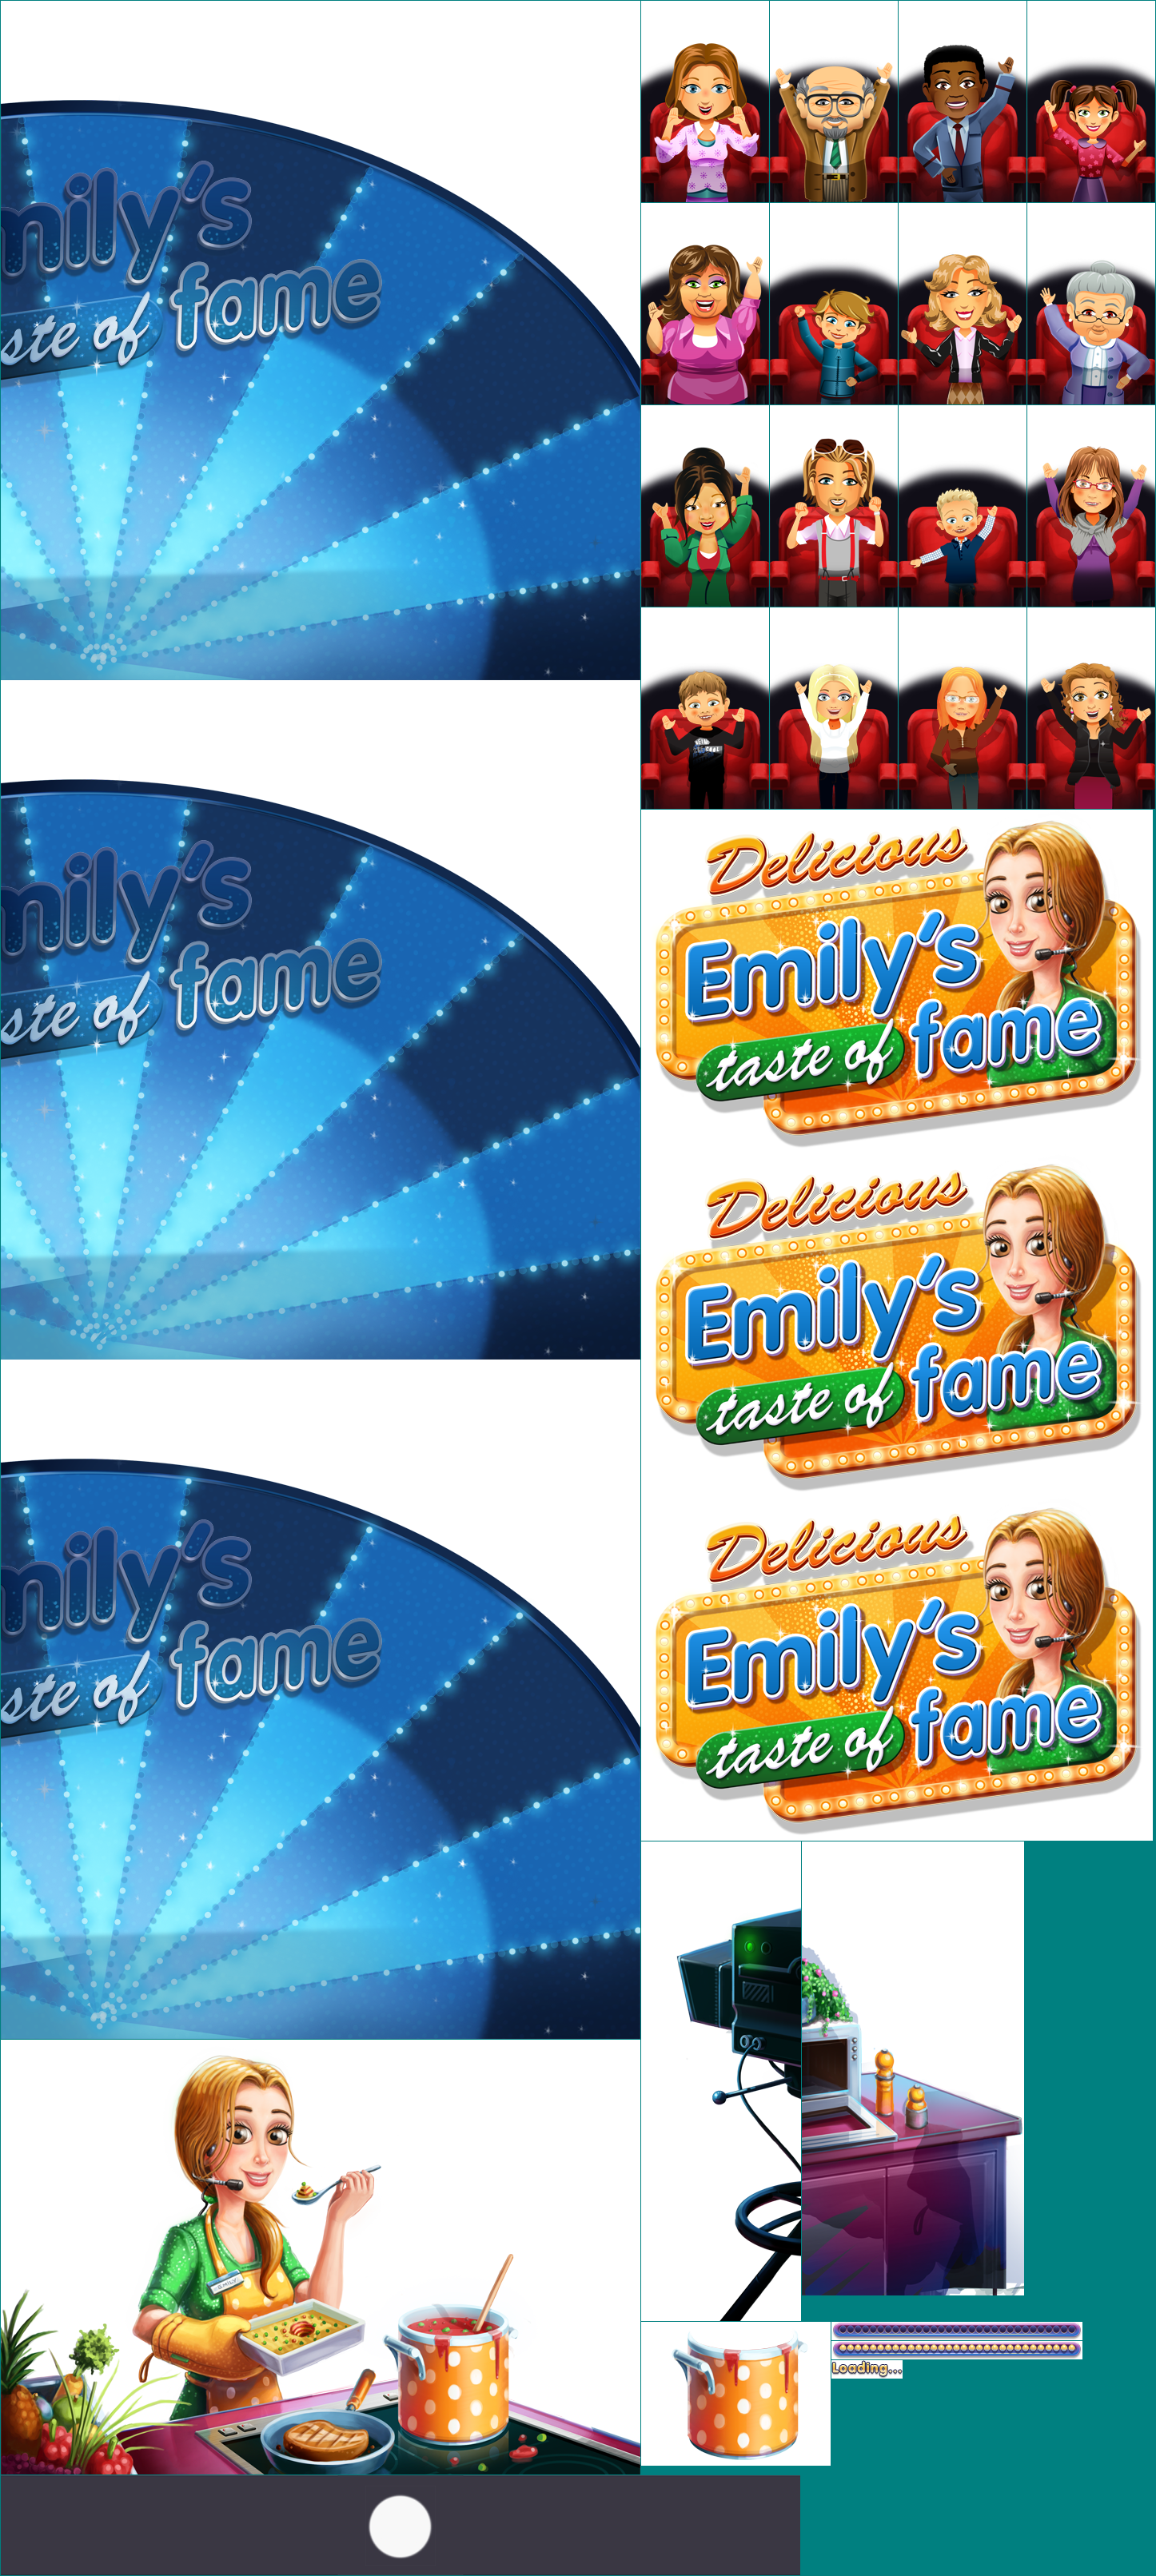 Delicious - Emily's Taste of Fame - Loading Screen